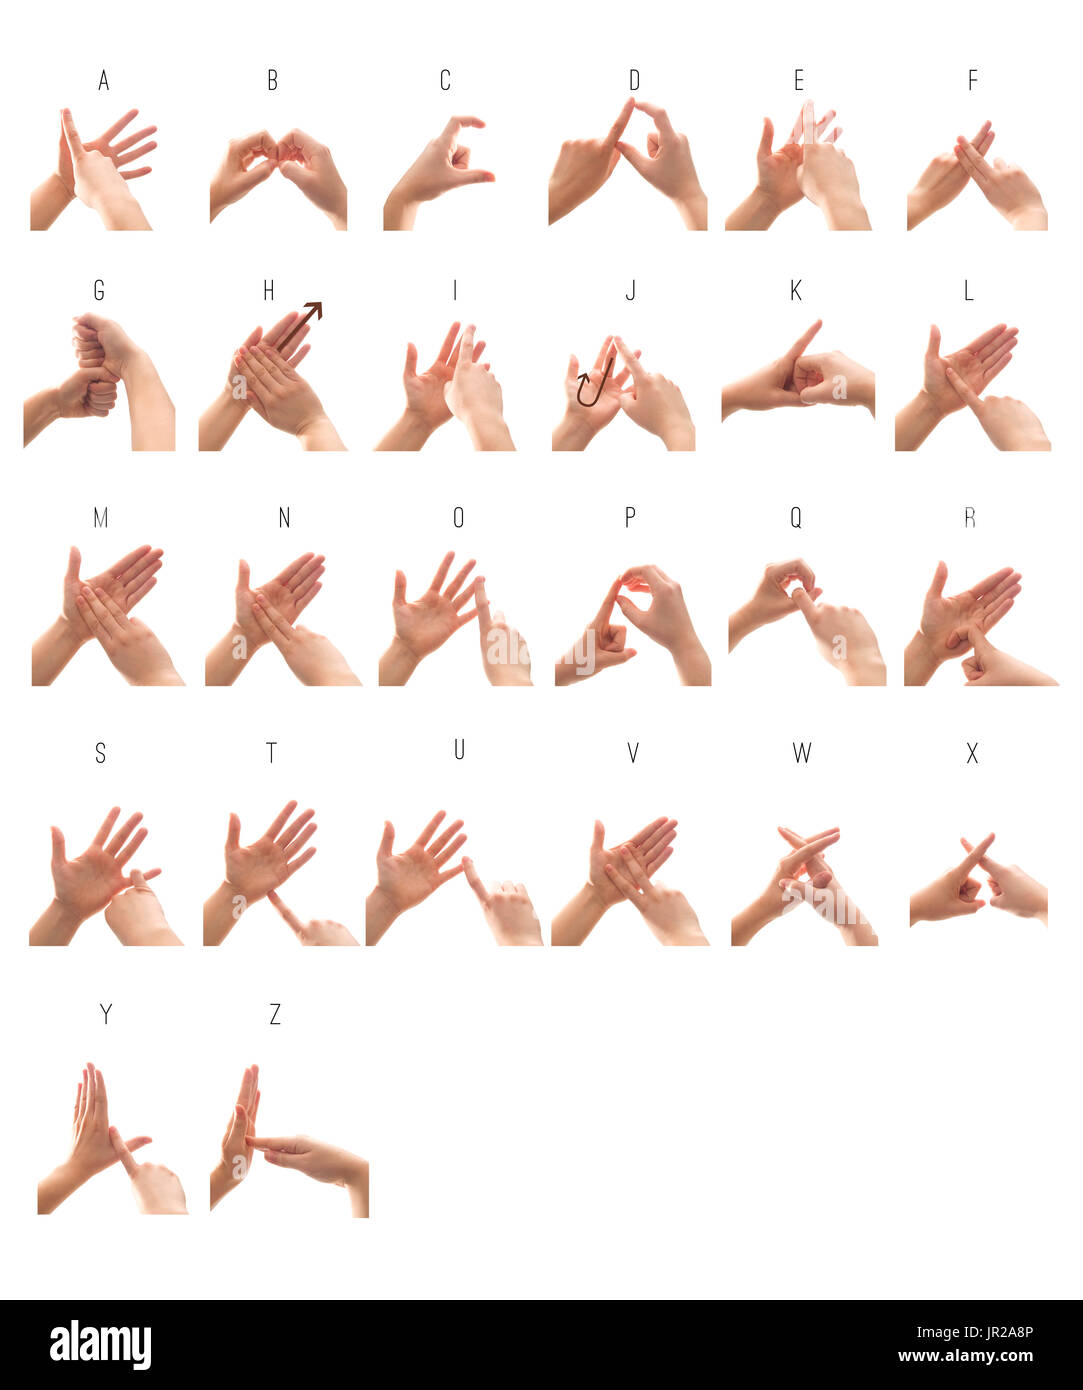 british-sign-language-alphabet-stock-photo-alamy